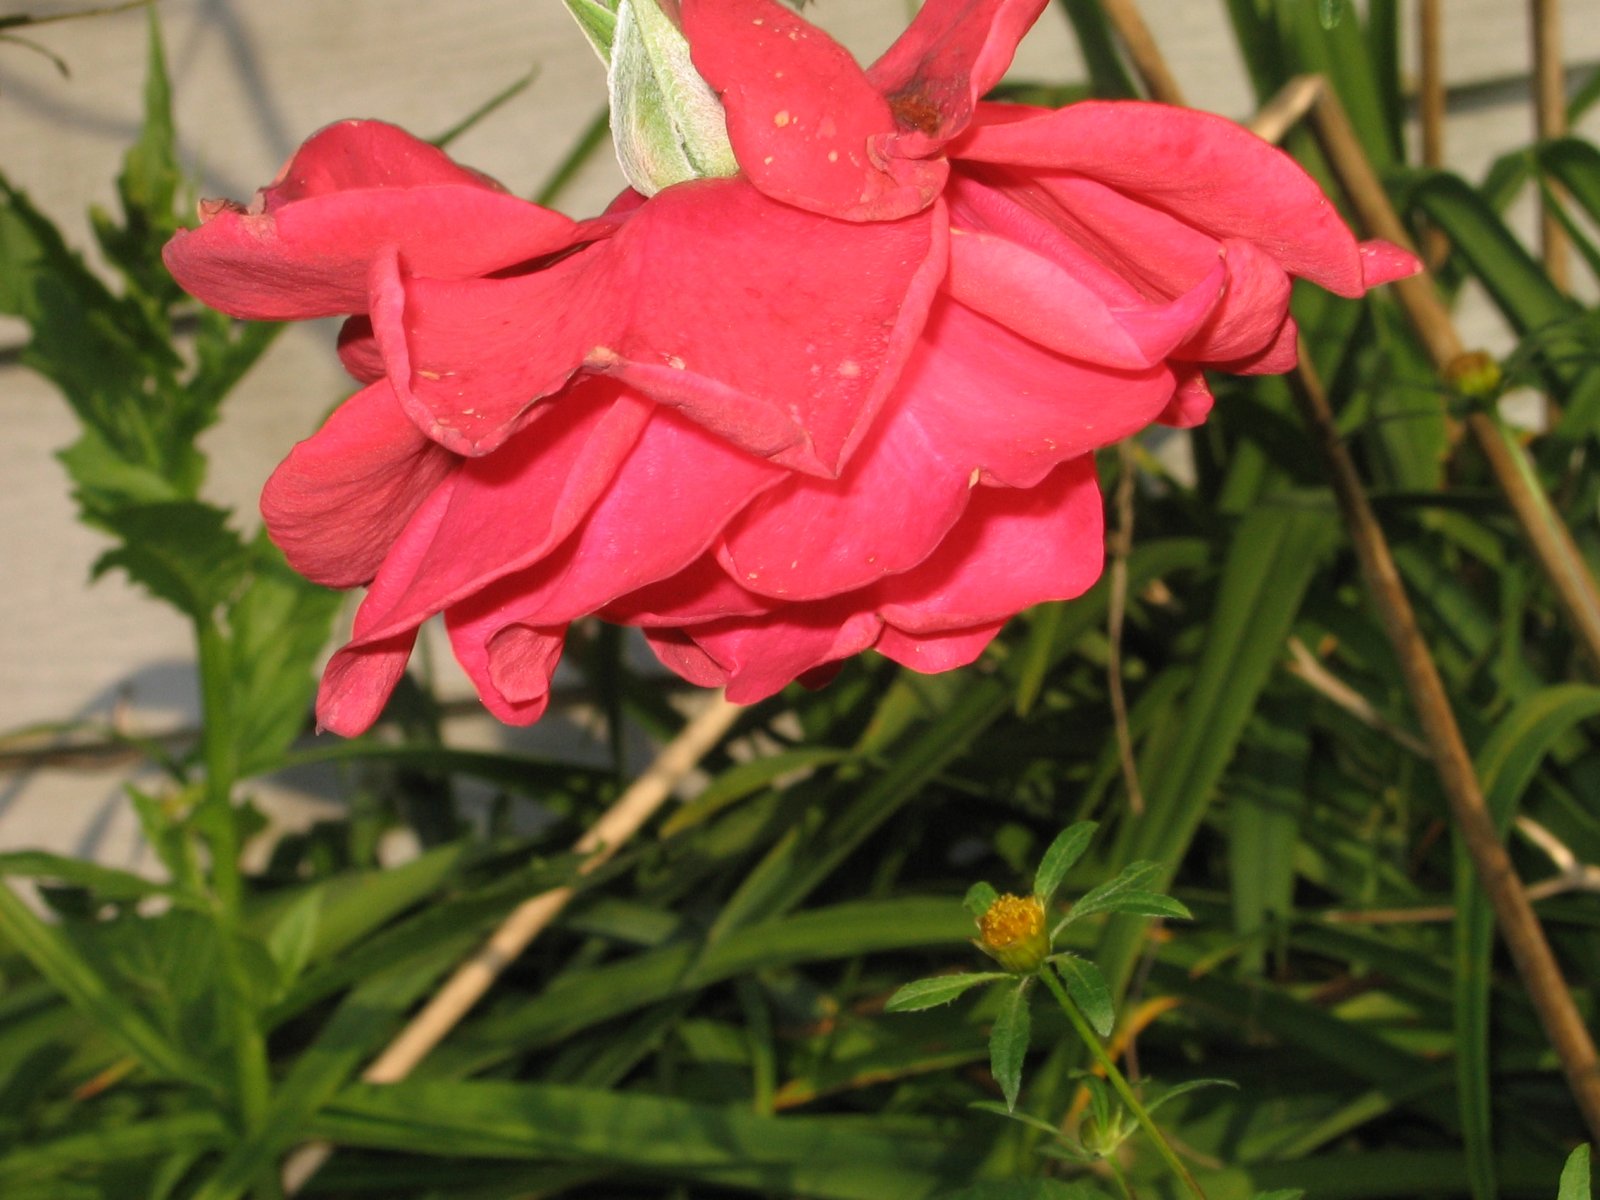 Rose, Bspo06, Flower, Plant, Red, HQ Photo